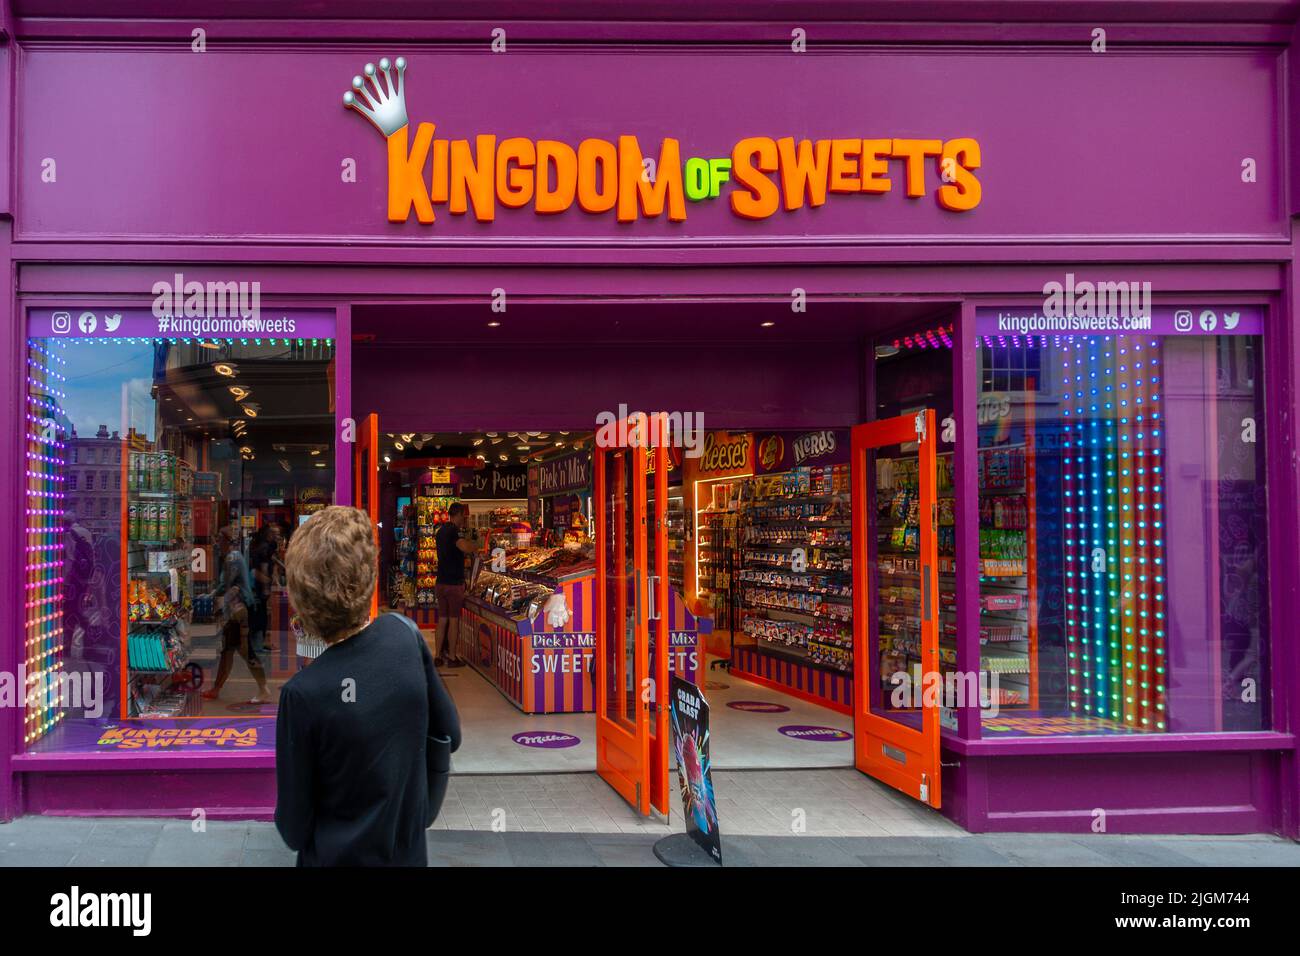 Royaume des sucreries,Sweet Shop,Sall Street,Bath,Somerset,Royaume-Uni Banque D'Images